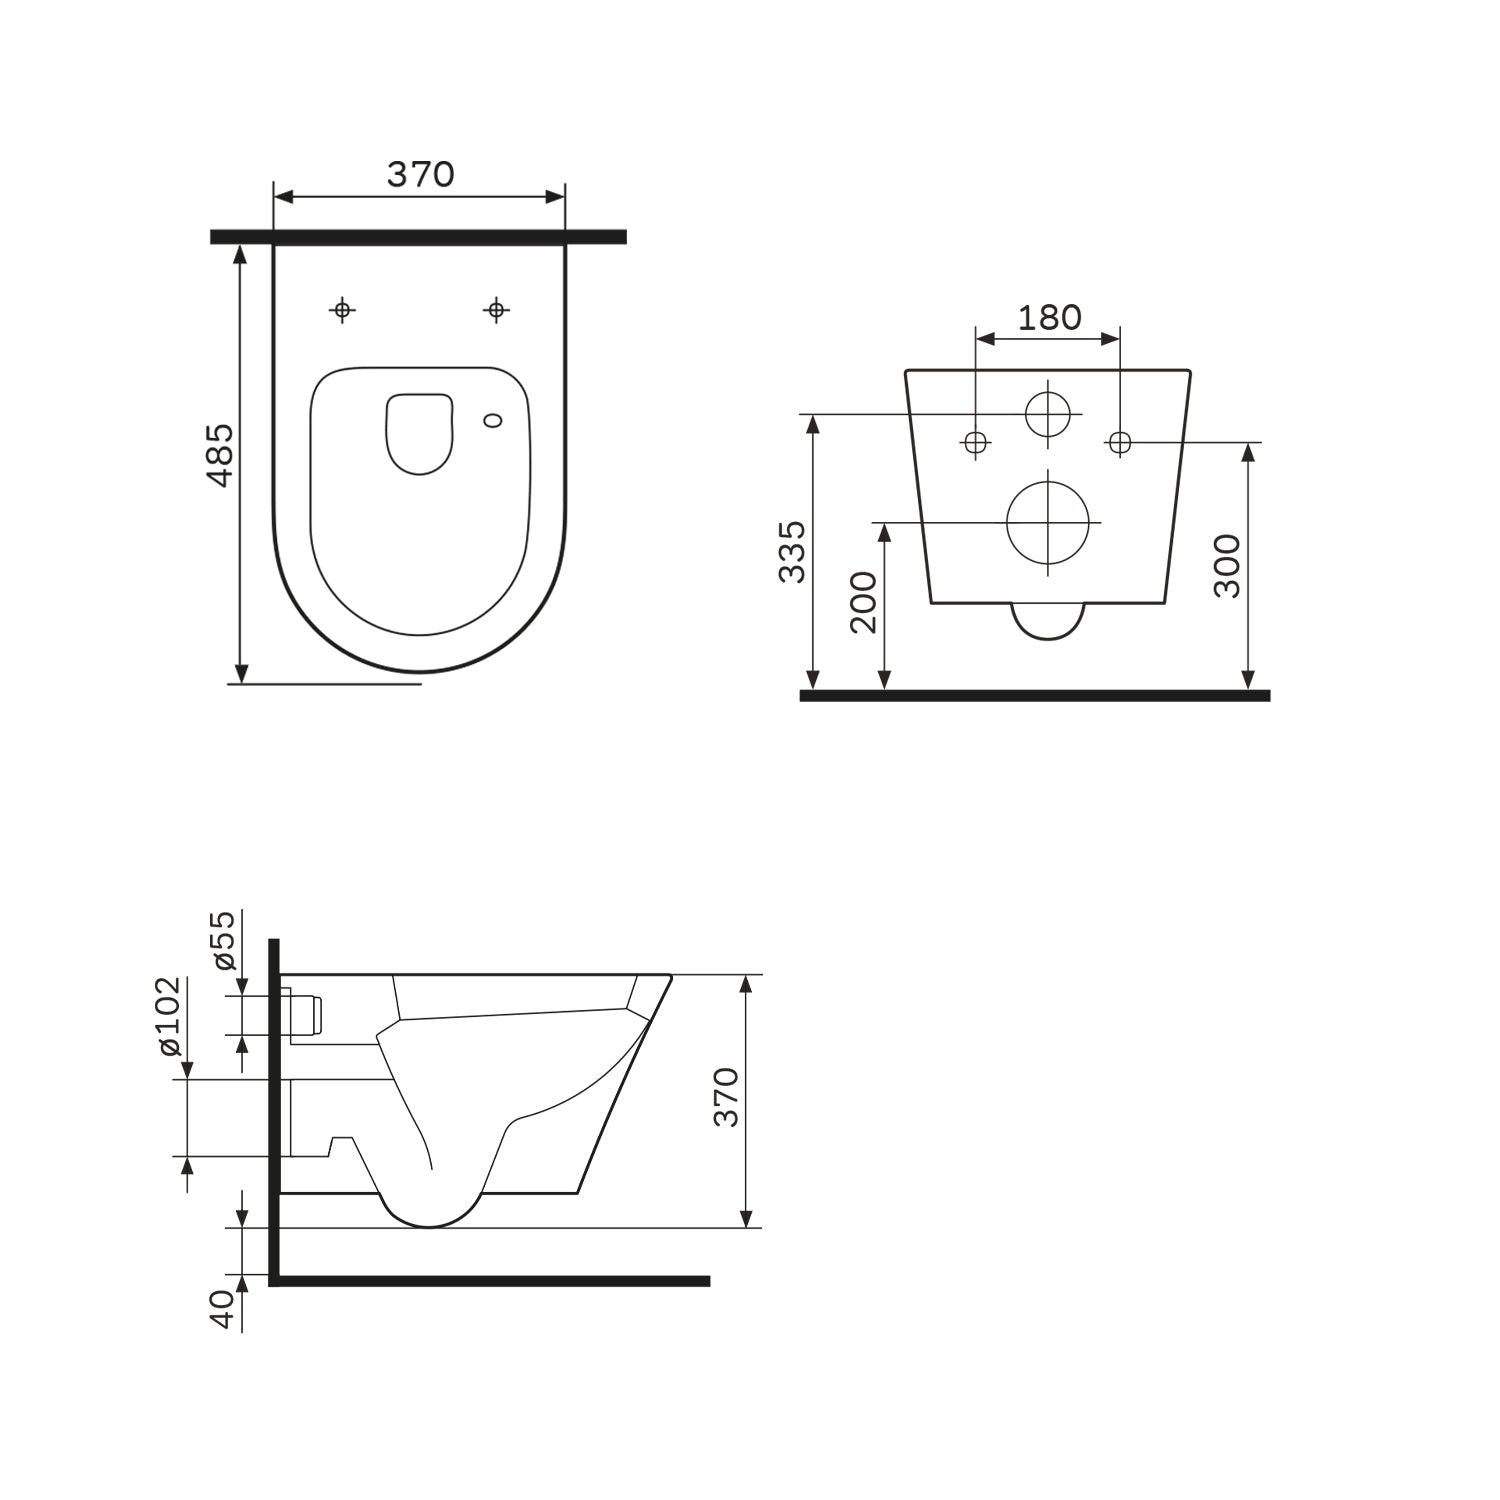 CPA1900SC Spike FlashClean Spülrandloses Wand-WC mit Softclosing-Sitzabdeckung